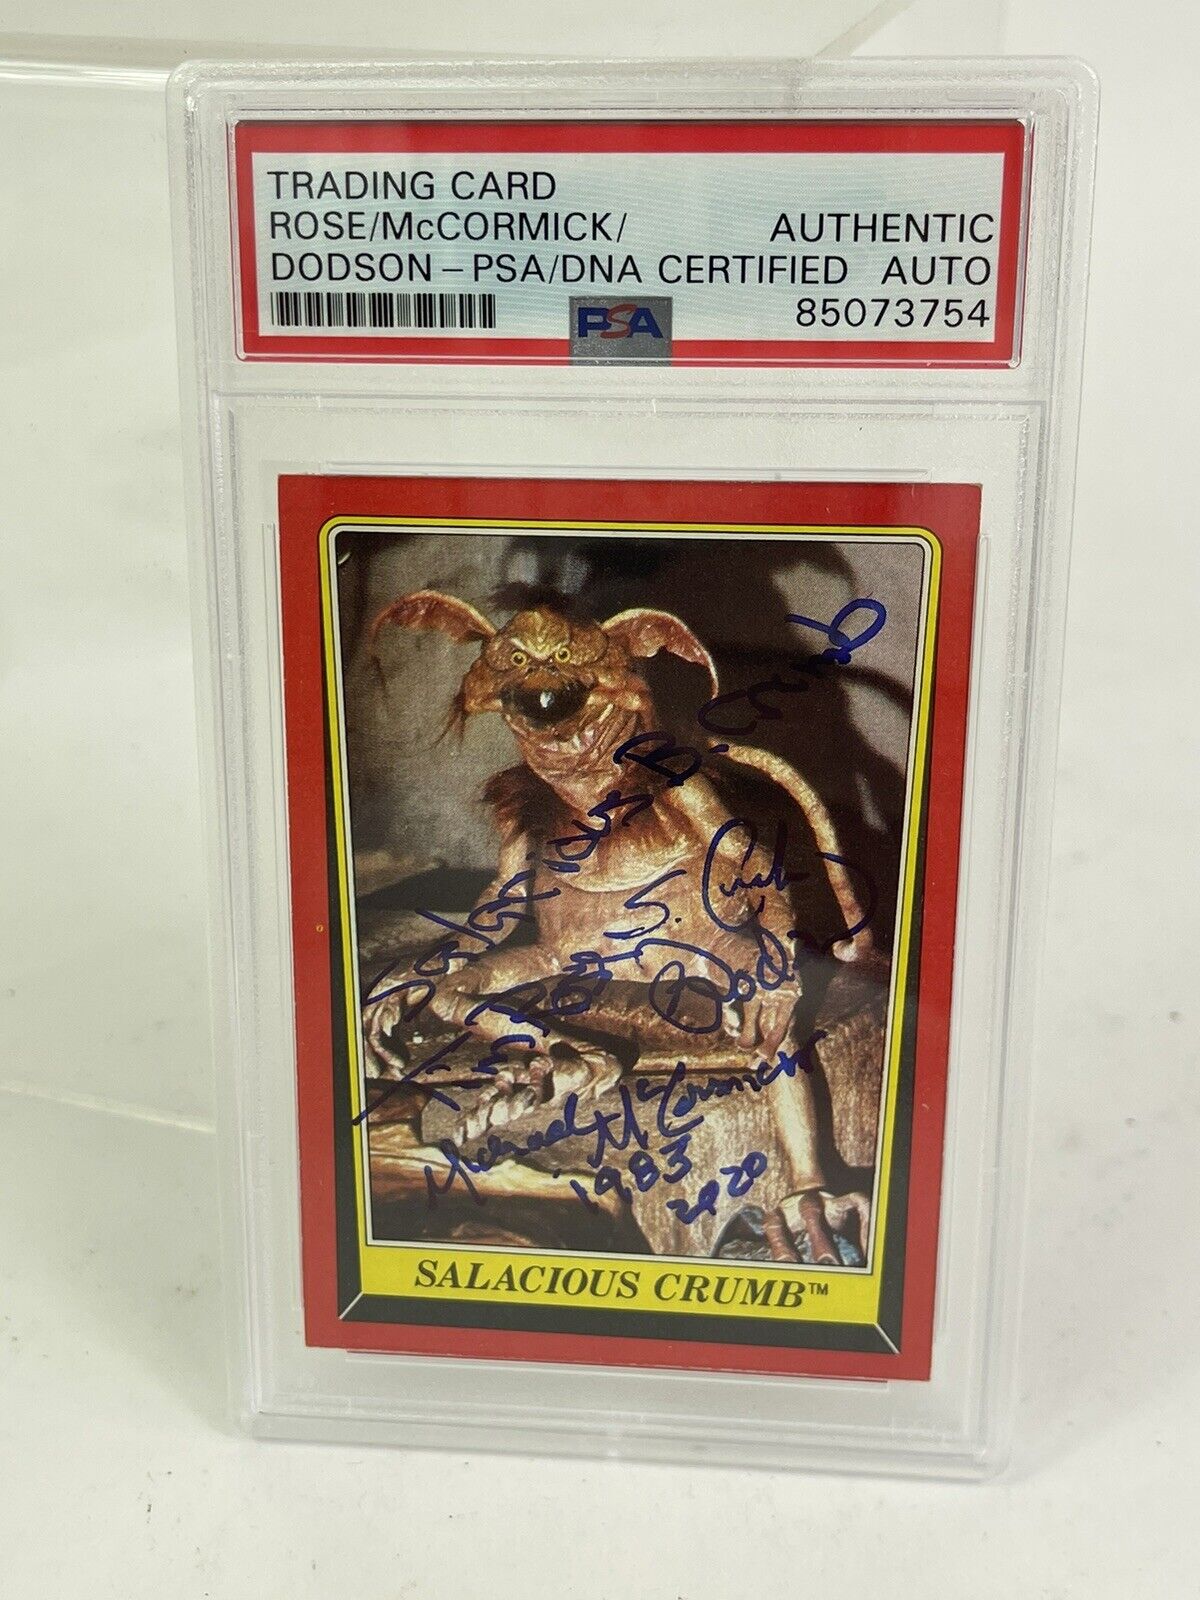 Star Wars Topps 1983 Trading Card Salacious Crumb McCormick Dodson Rose PSA Slab